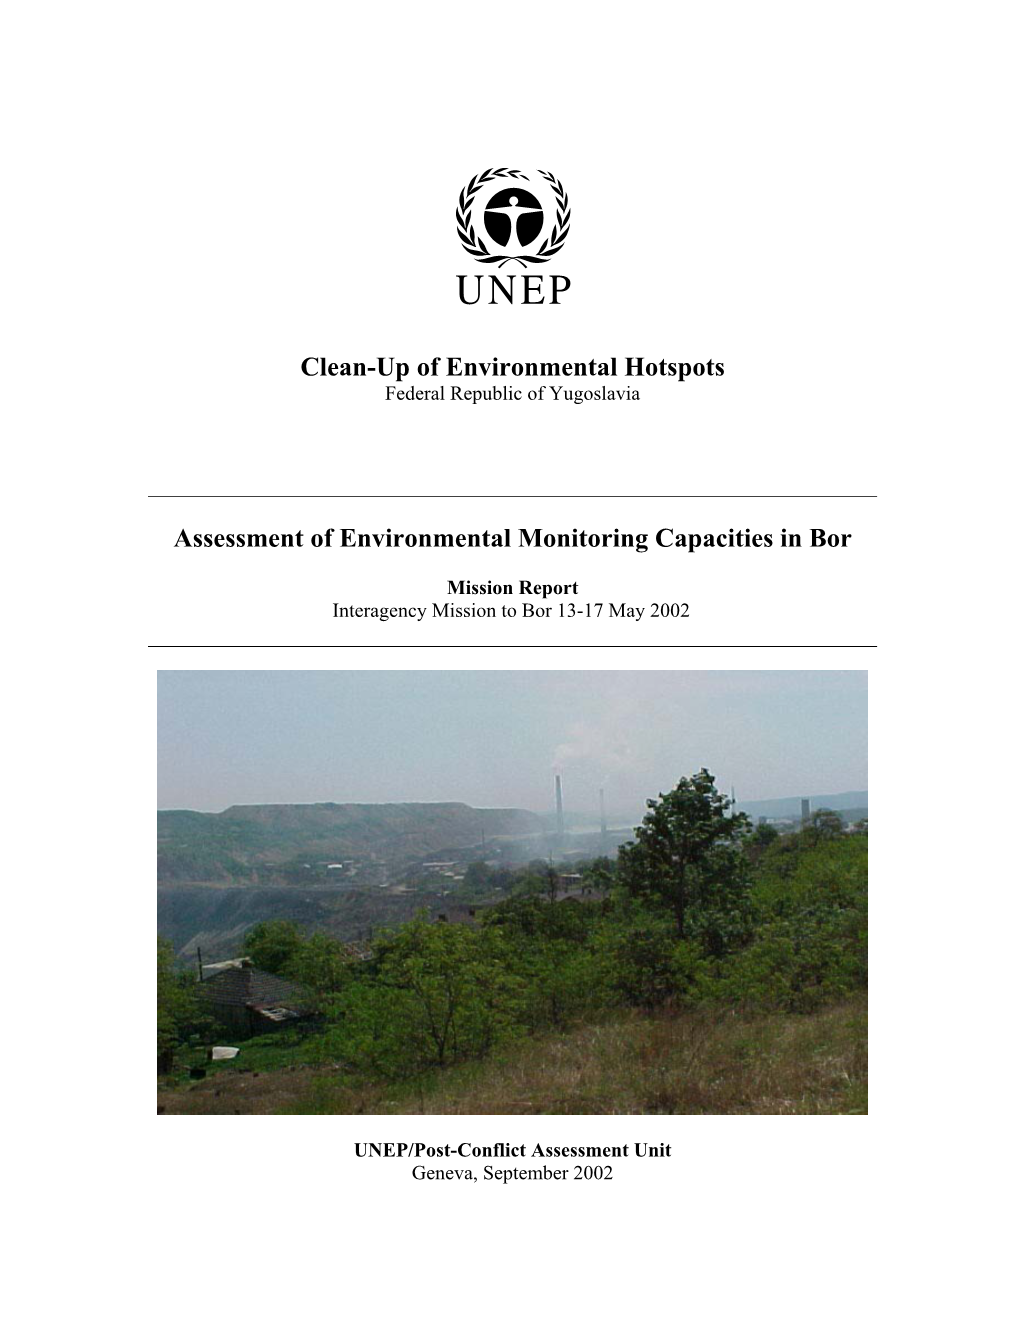 Clean-Up of Environmental Hotspots Assessment of Environmental